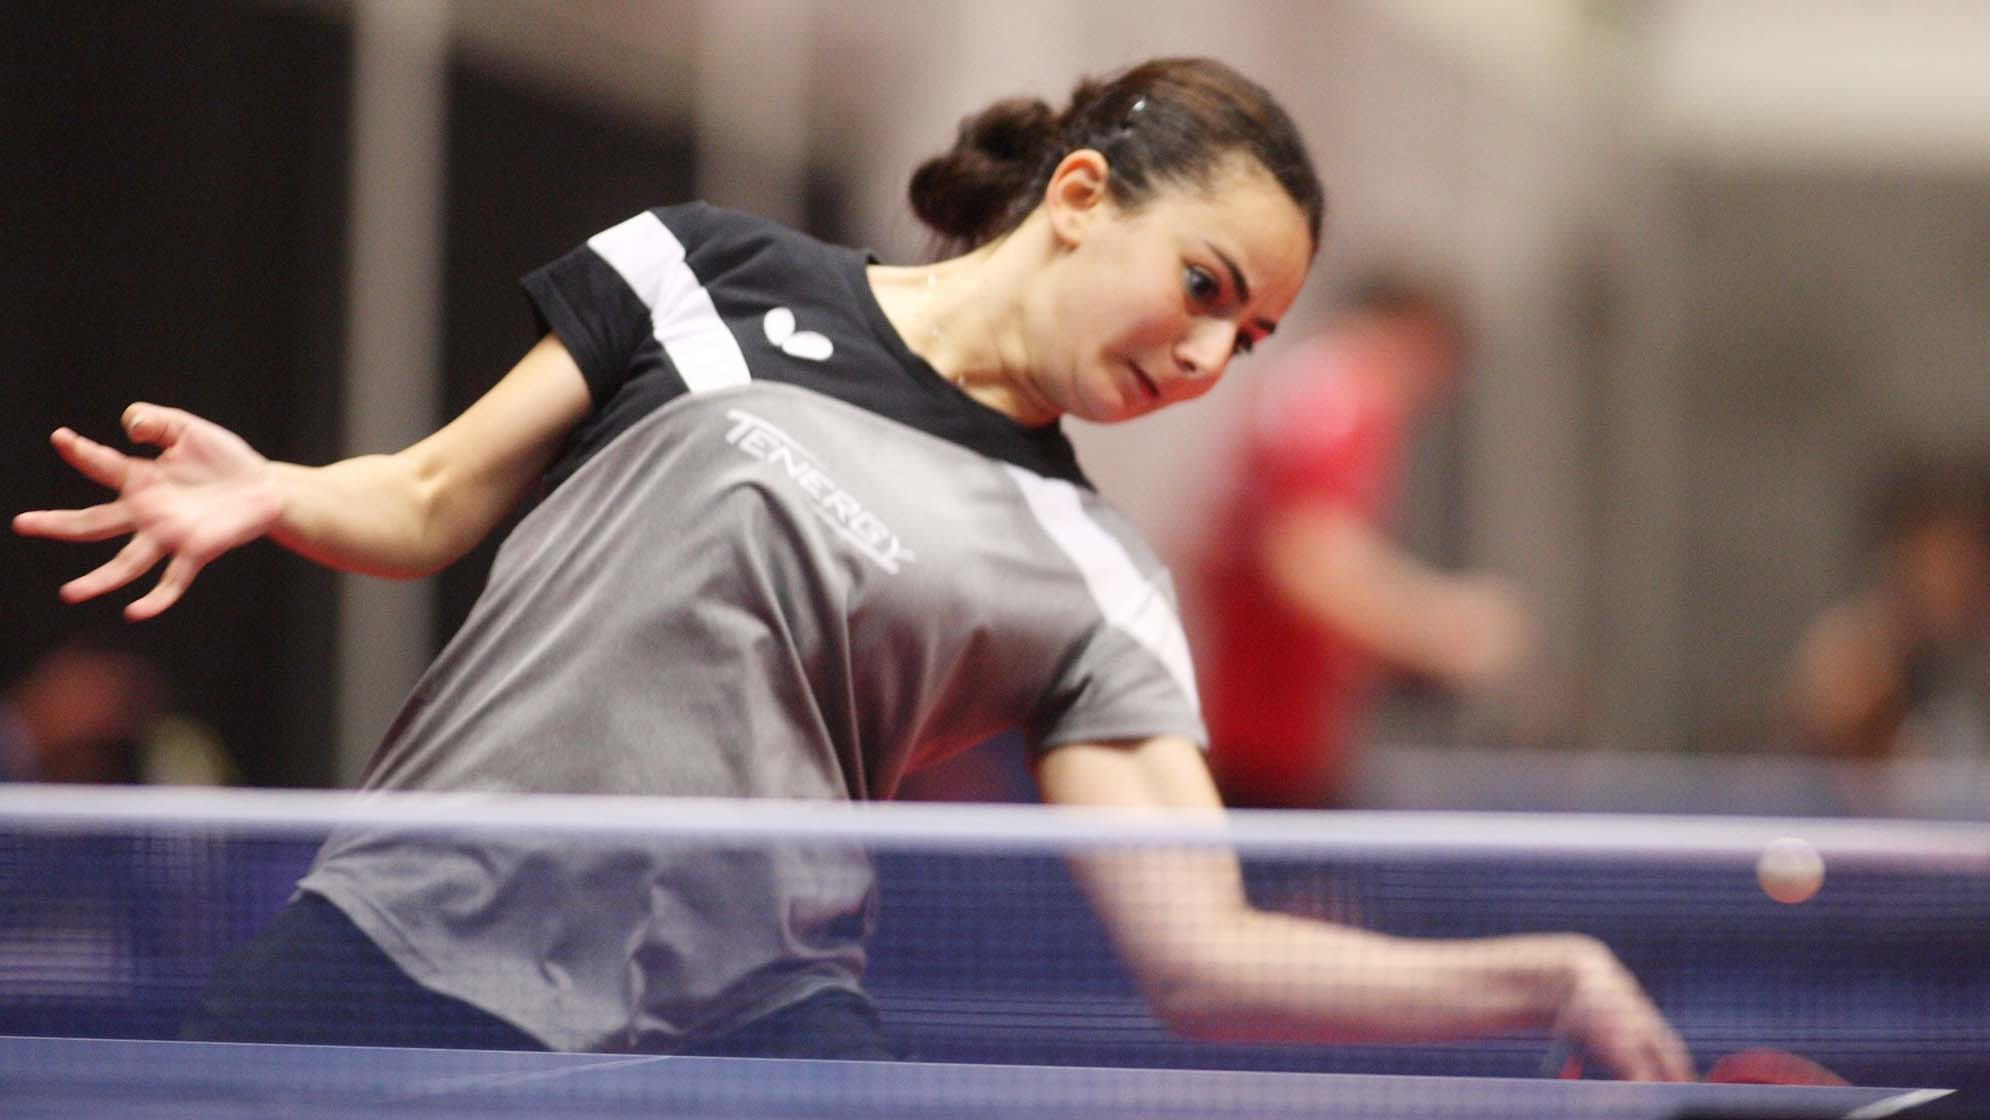 Egypt’s Dina Meshref is the defending women's singles champion ©Ireneusz Kanabrodzki/ITTF